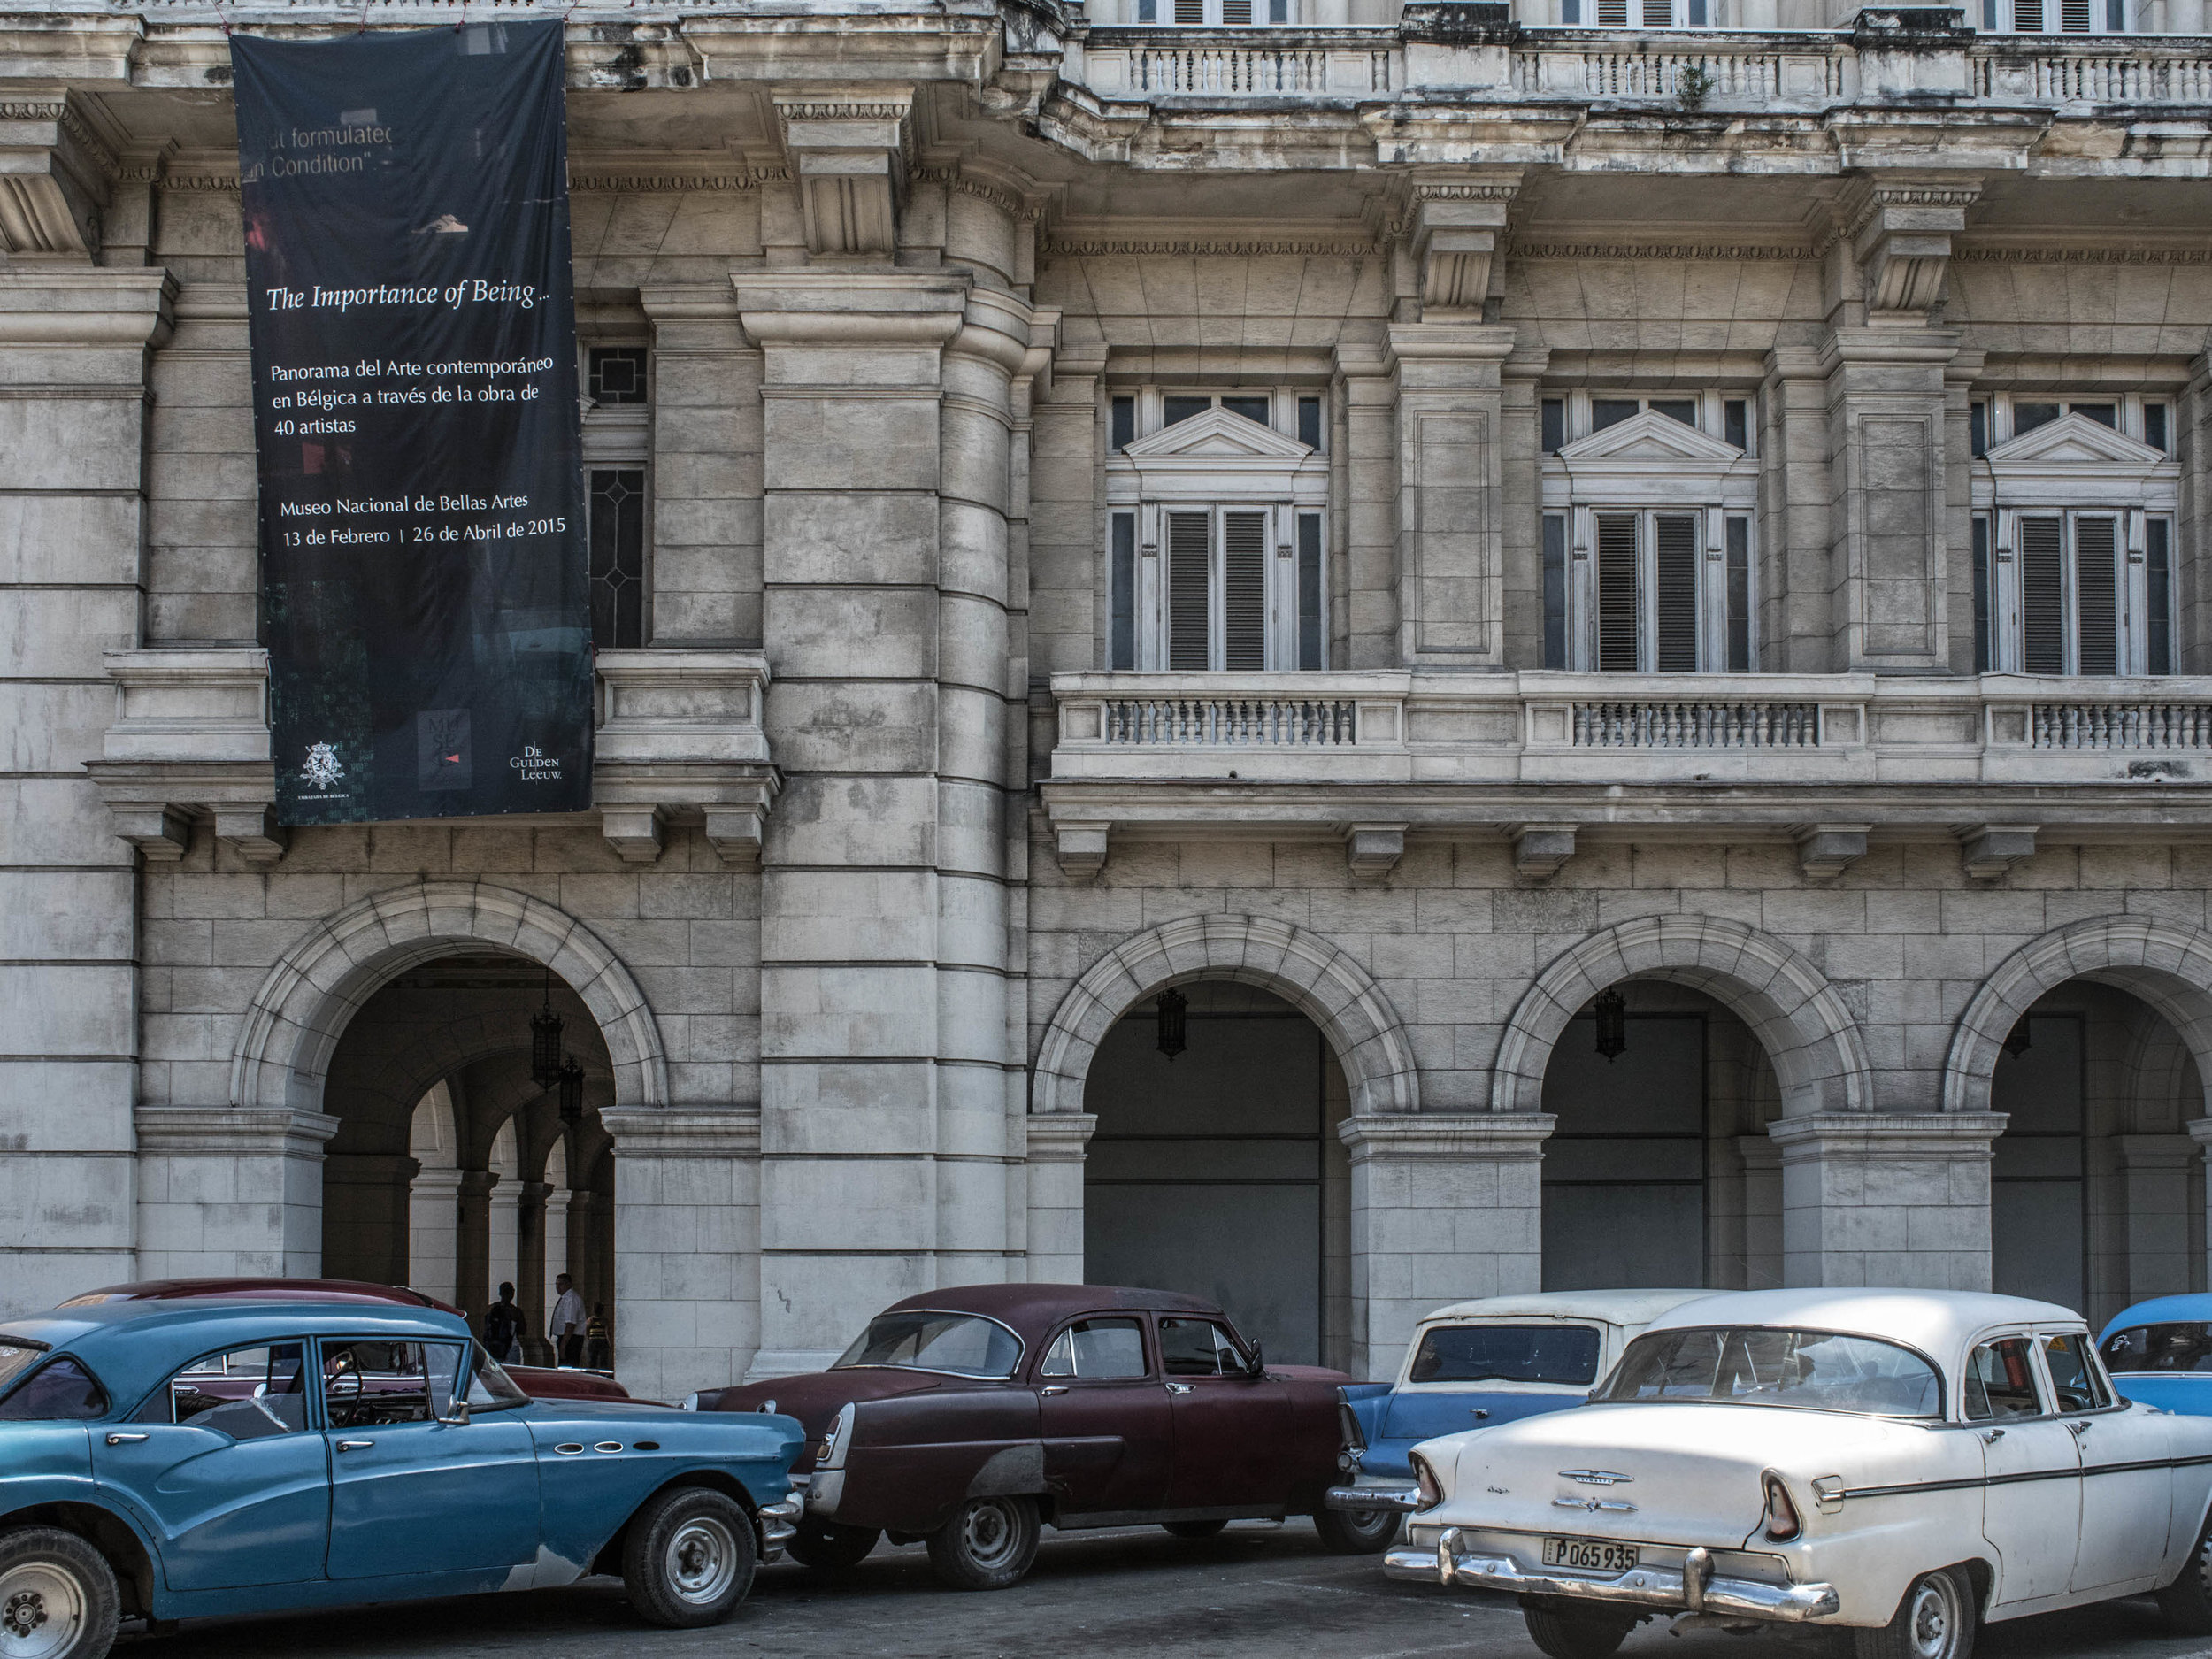  'The importance of Being' MAM – Rio de Janeiro, Brazil, 2015, MACBA – Buenos Aires, Argentina, 2015, MNBA – Havana, Cuba, 2015 